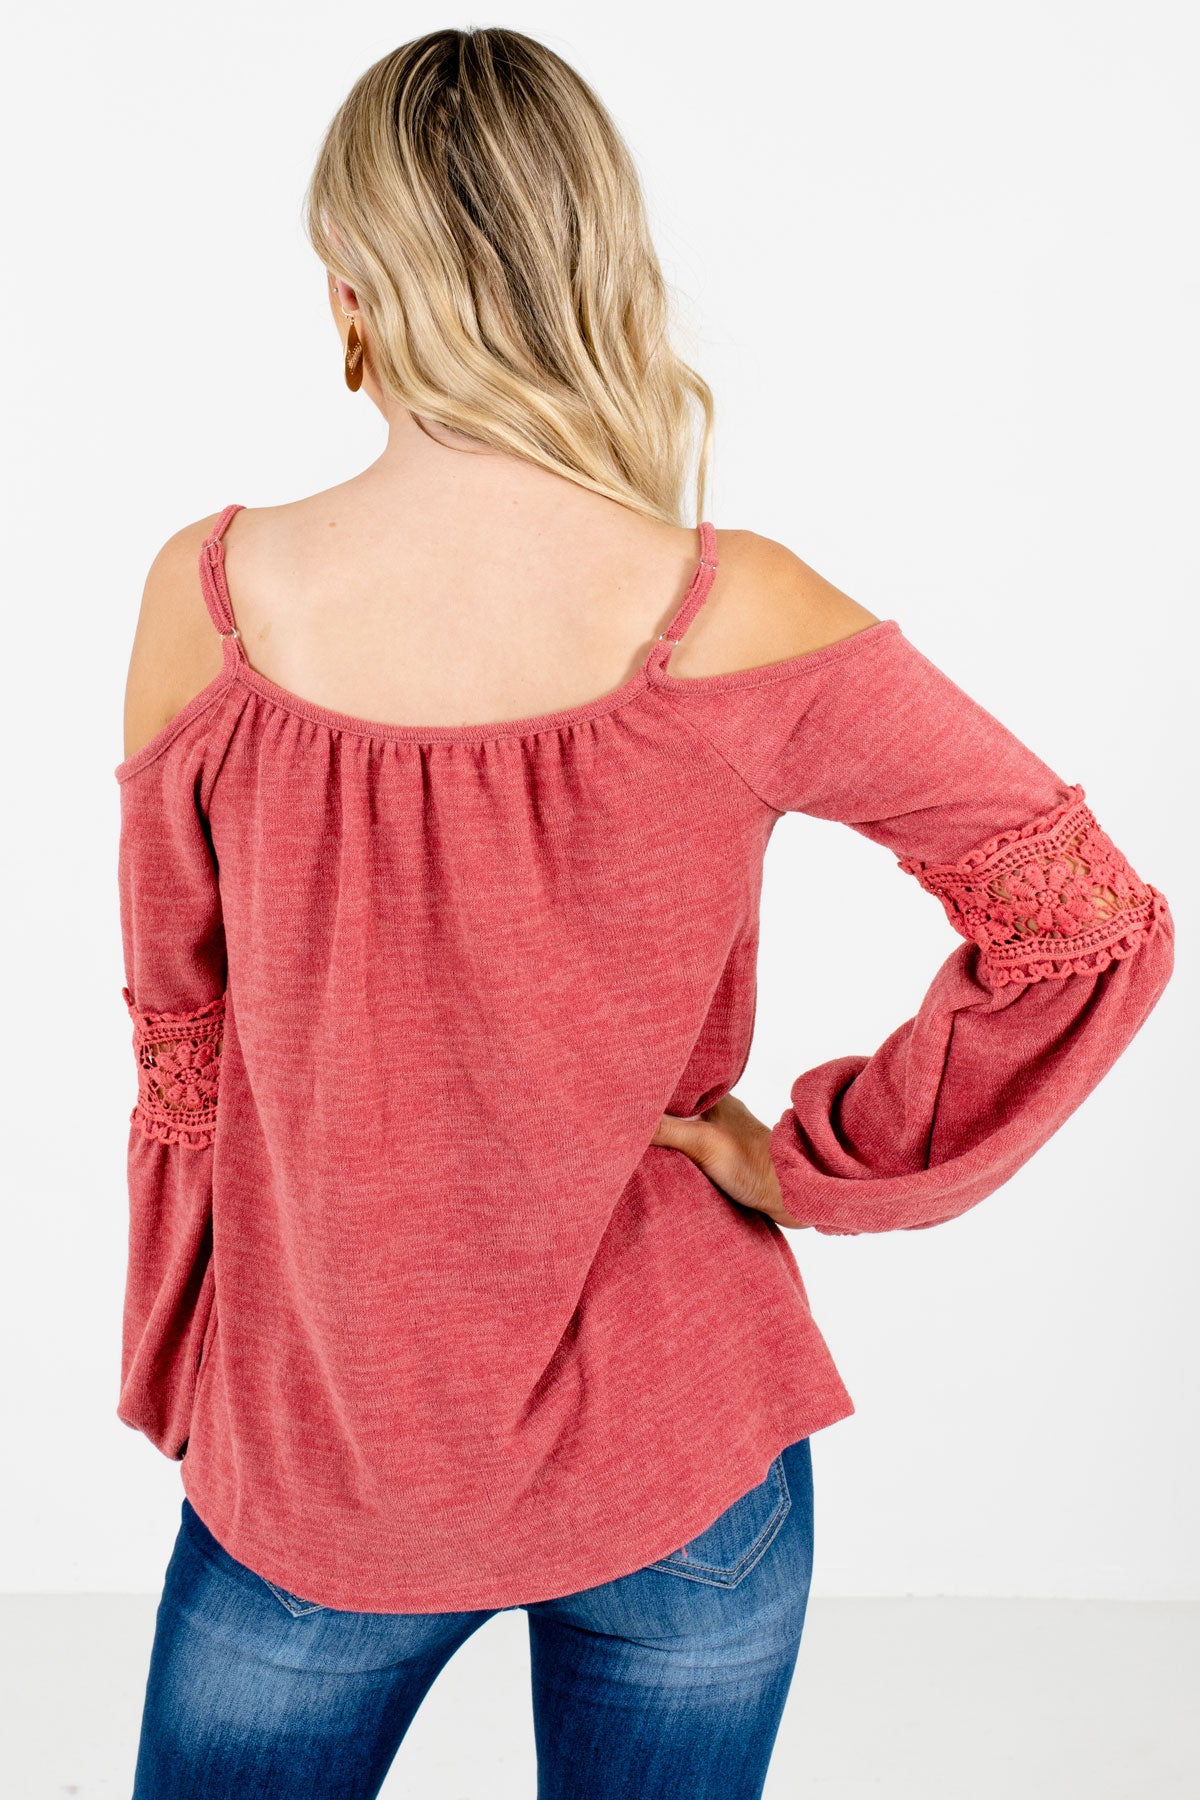 Women’s Pink Crochet Detailed Boutique Tops